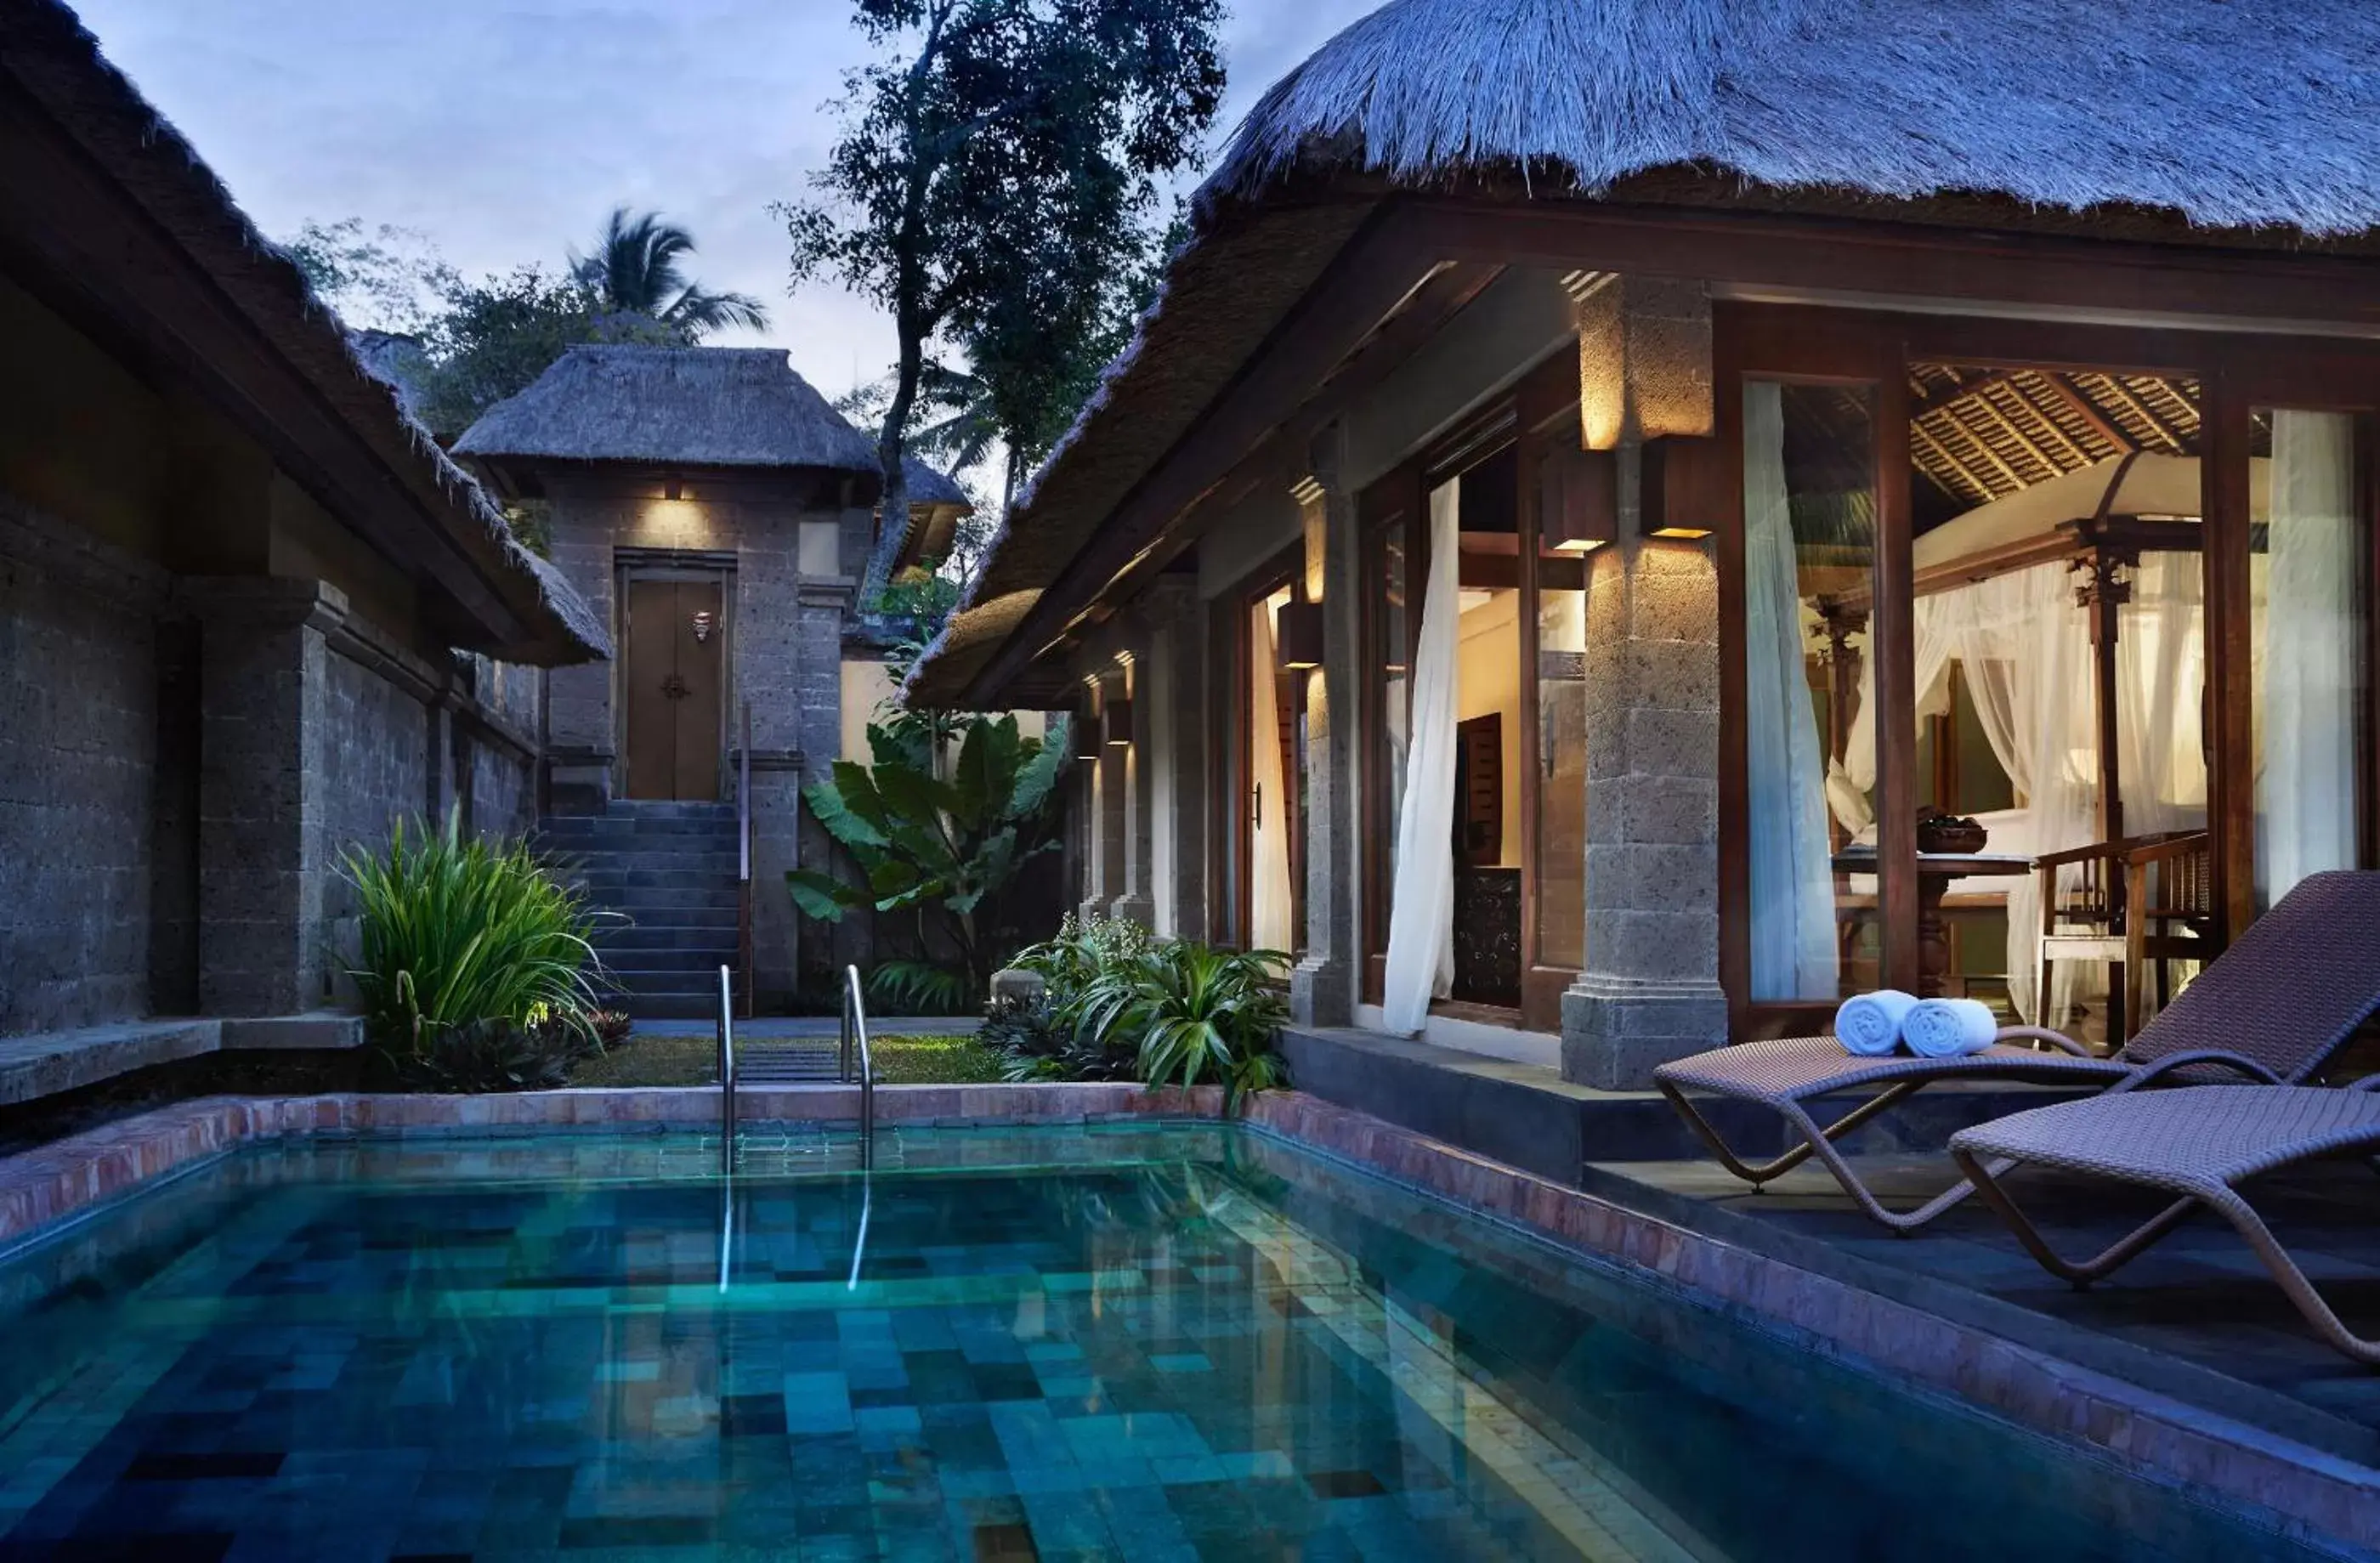 Garden Pool Villa with Free Benefits in Kamandalu Ubud - CHSE Certified